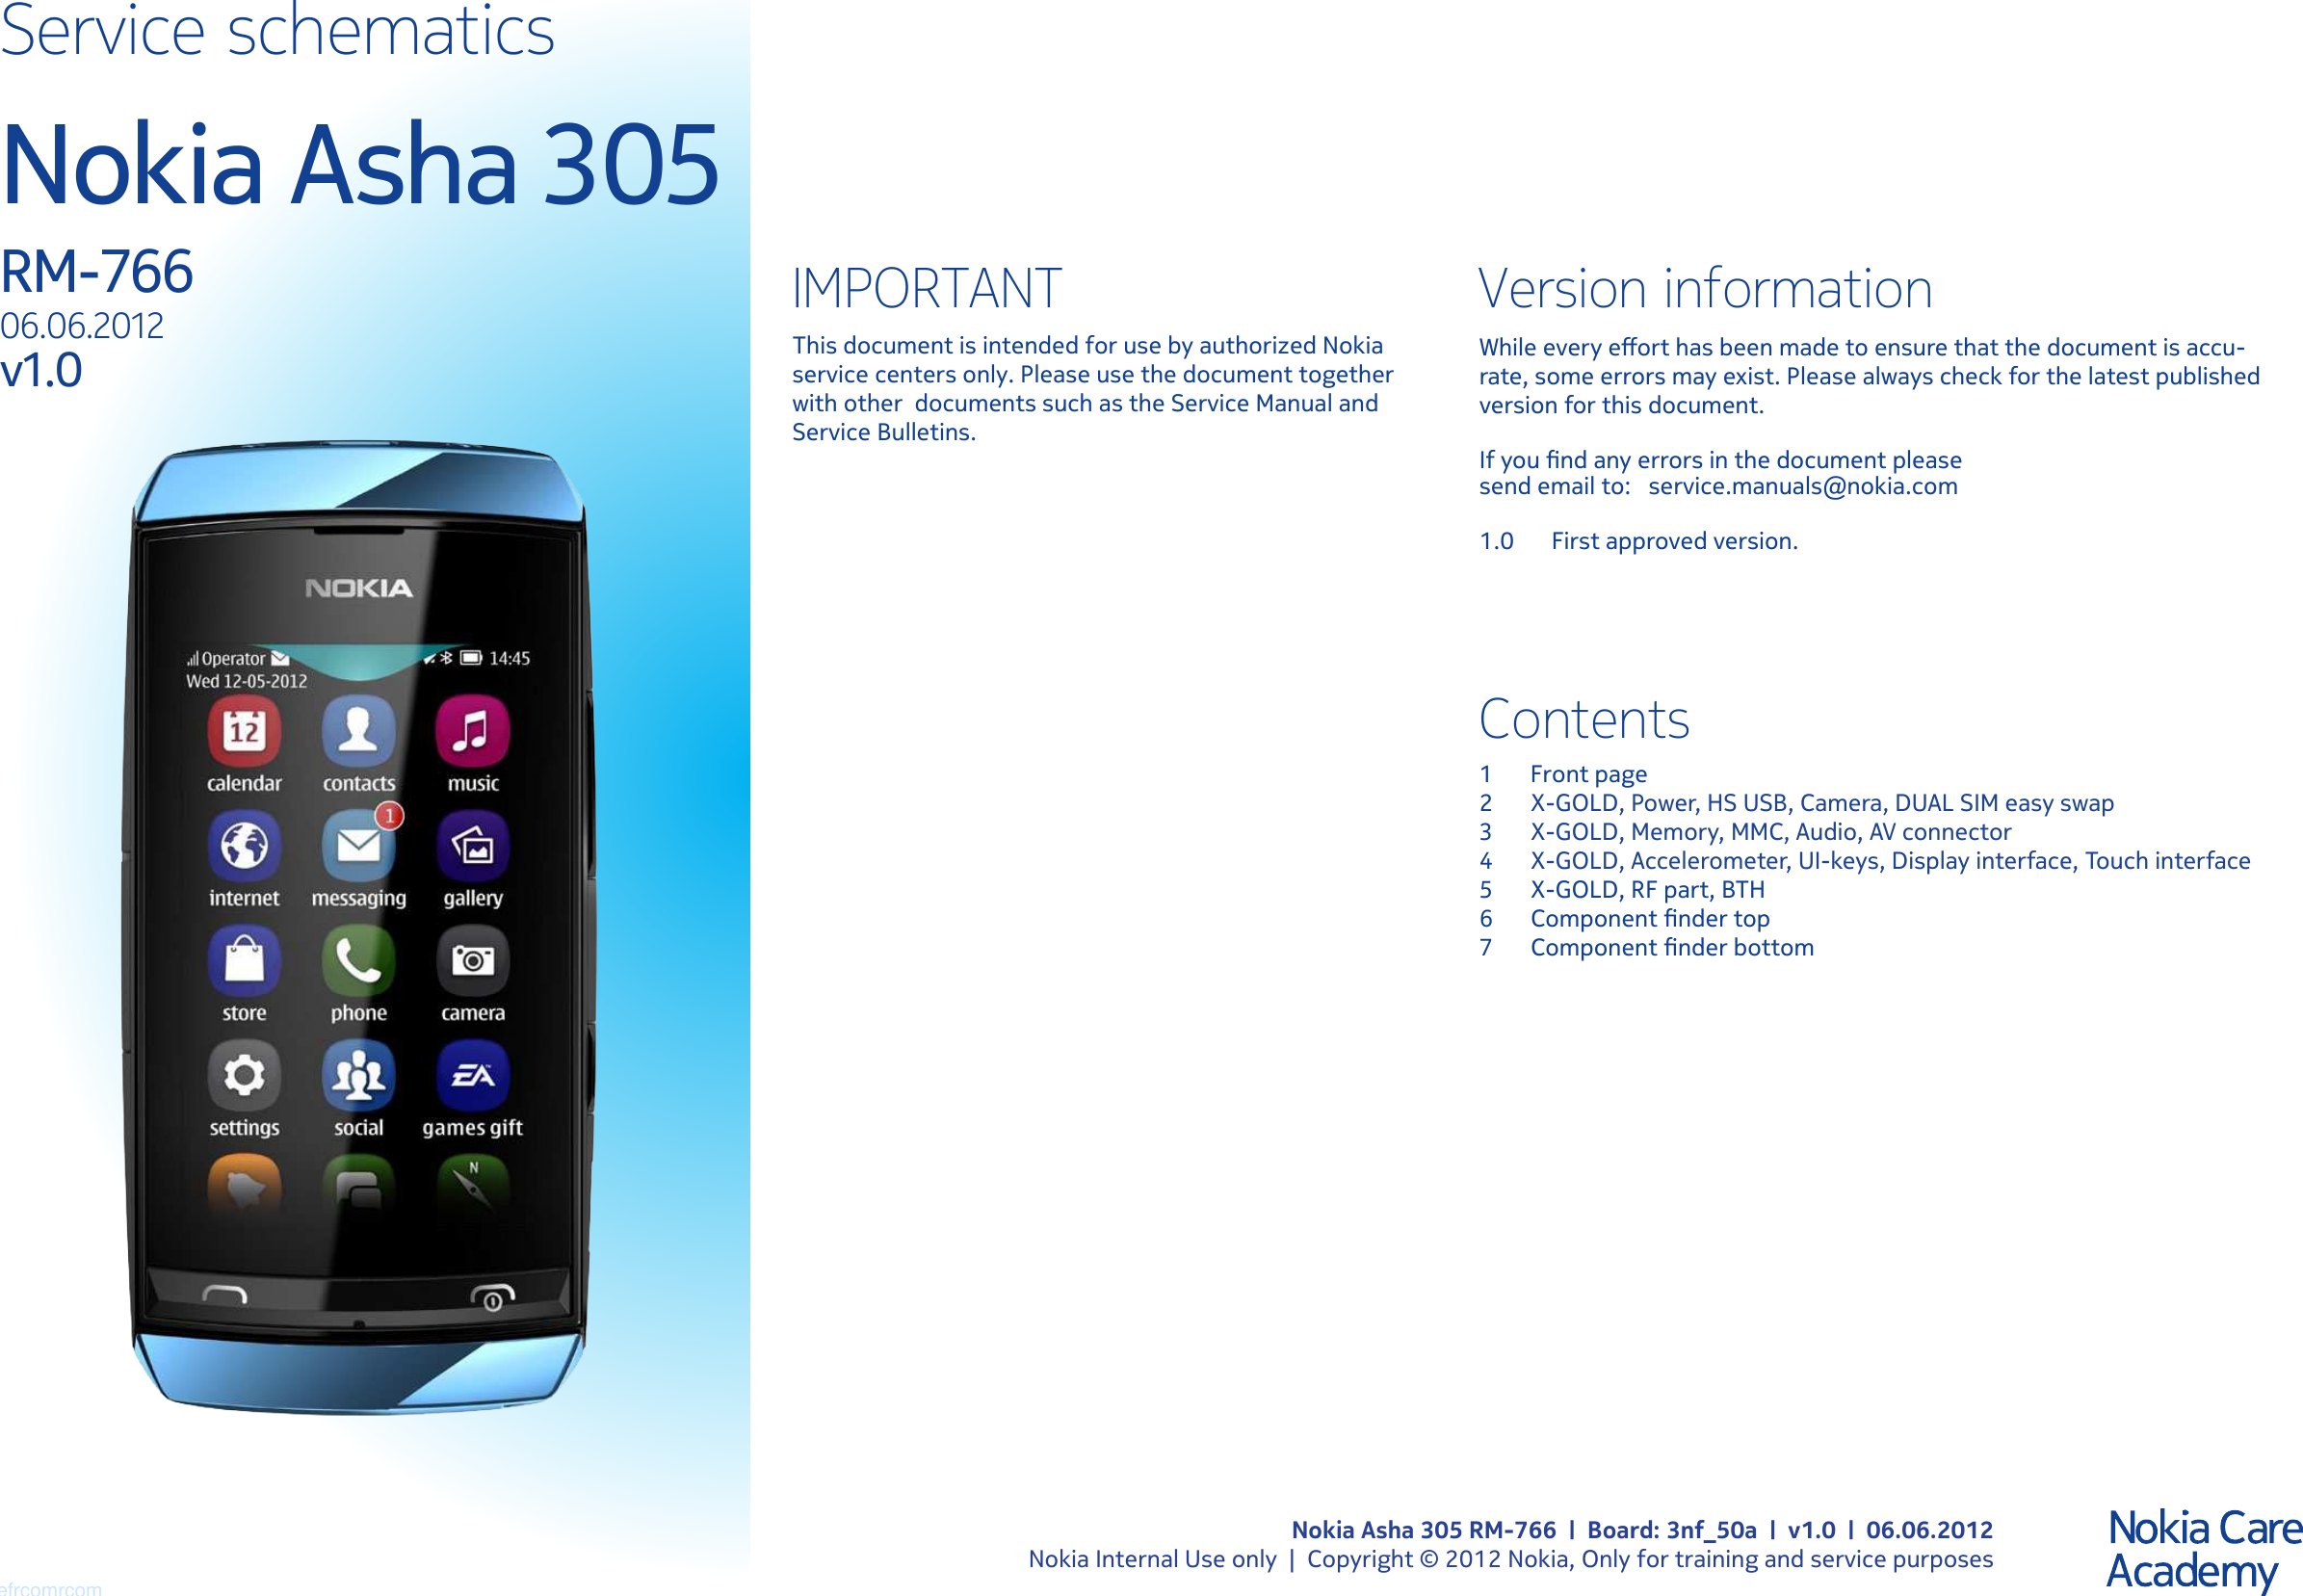 Page 1 of 8 - Nokia Asha 305 - Service Schematics. Www.s-manuals.com. Rm-766 Schematics V1.0